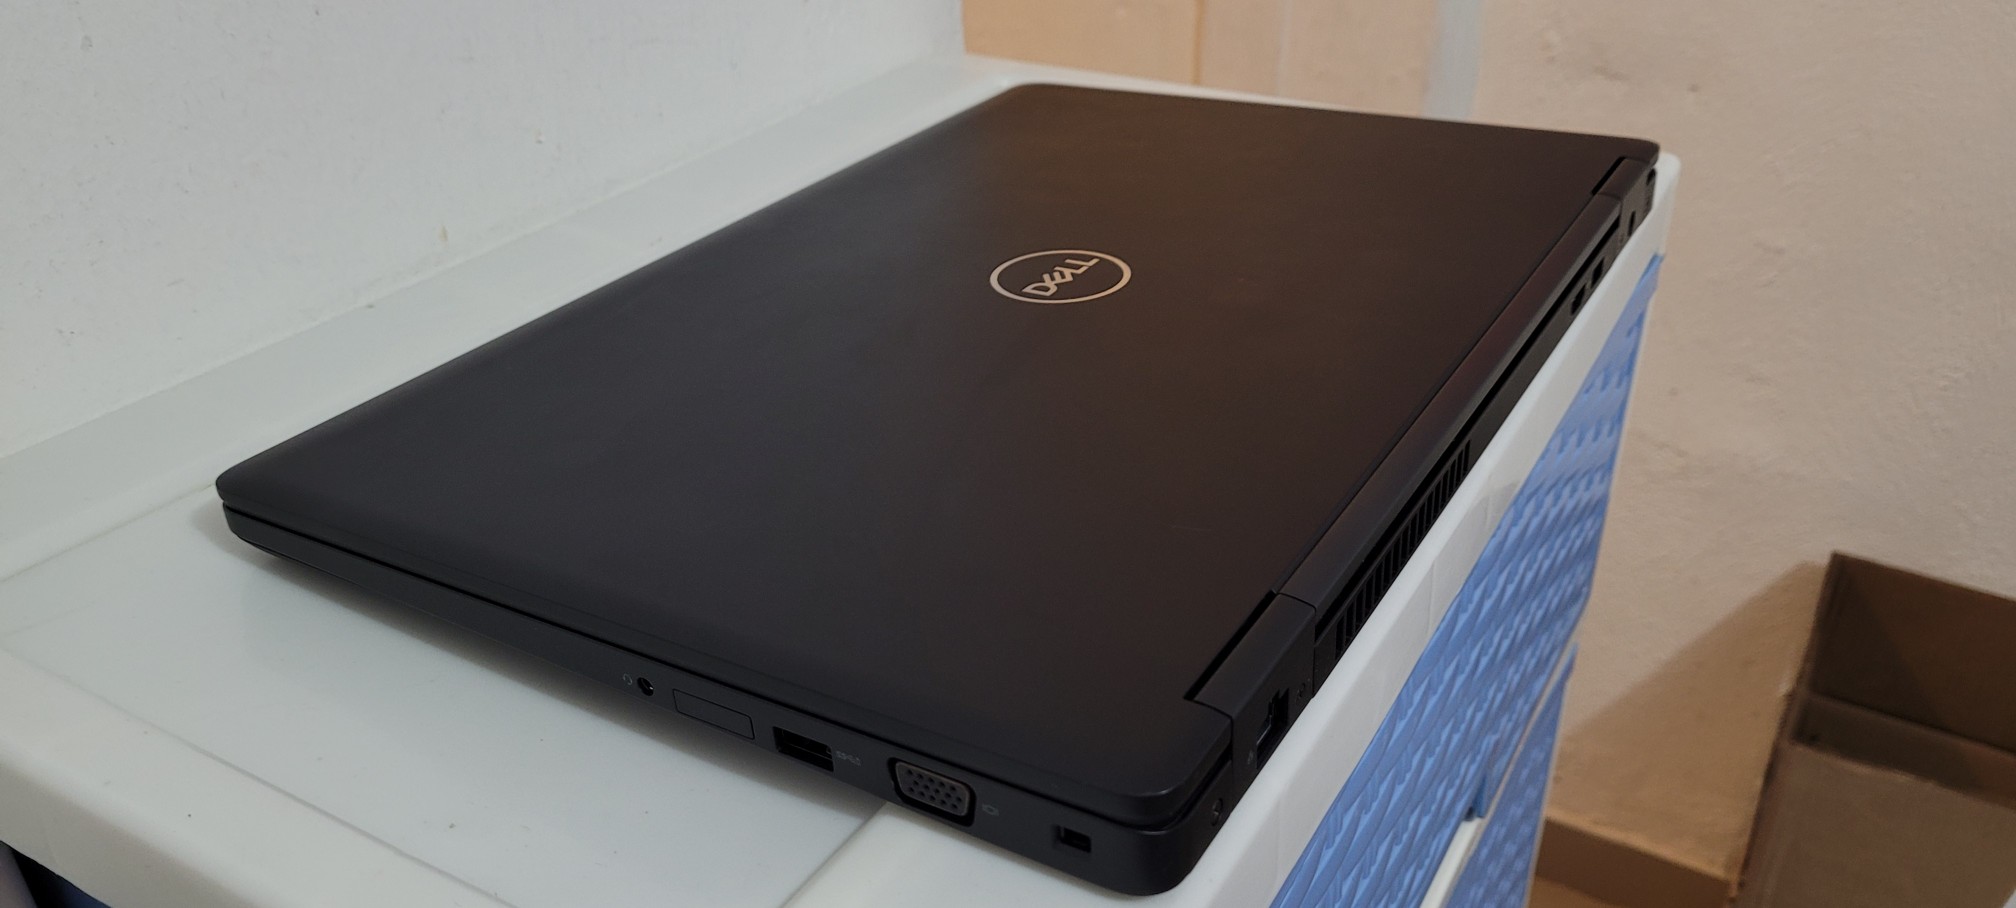 computadoras y laptops - Dell 5580 17 Pulg Core i5 7ma Gen Ram 8gb ddr4 Disco 256gb SSD 1080P 2